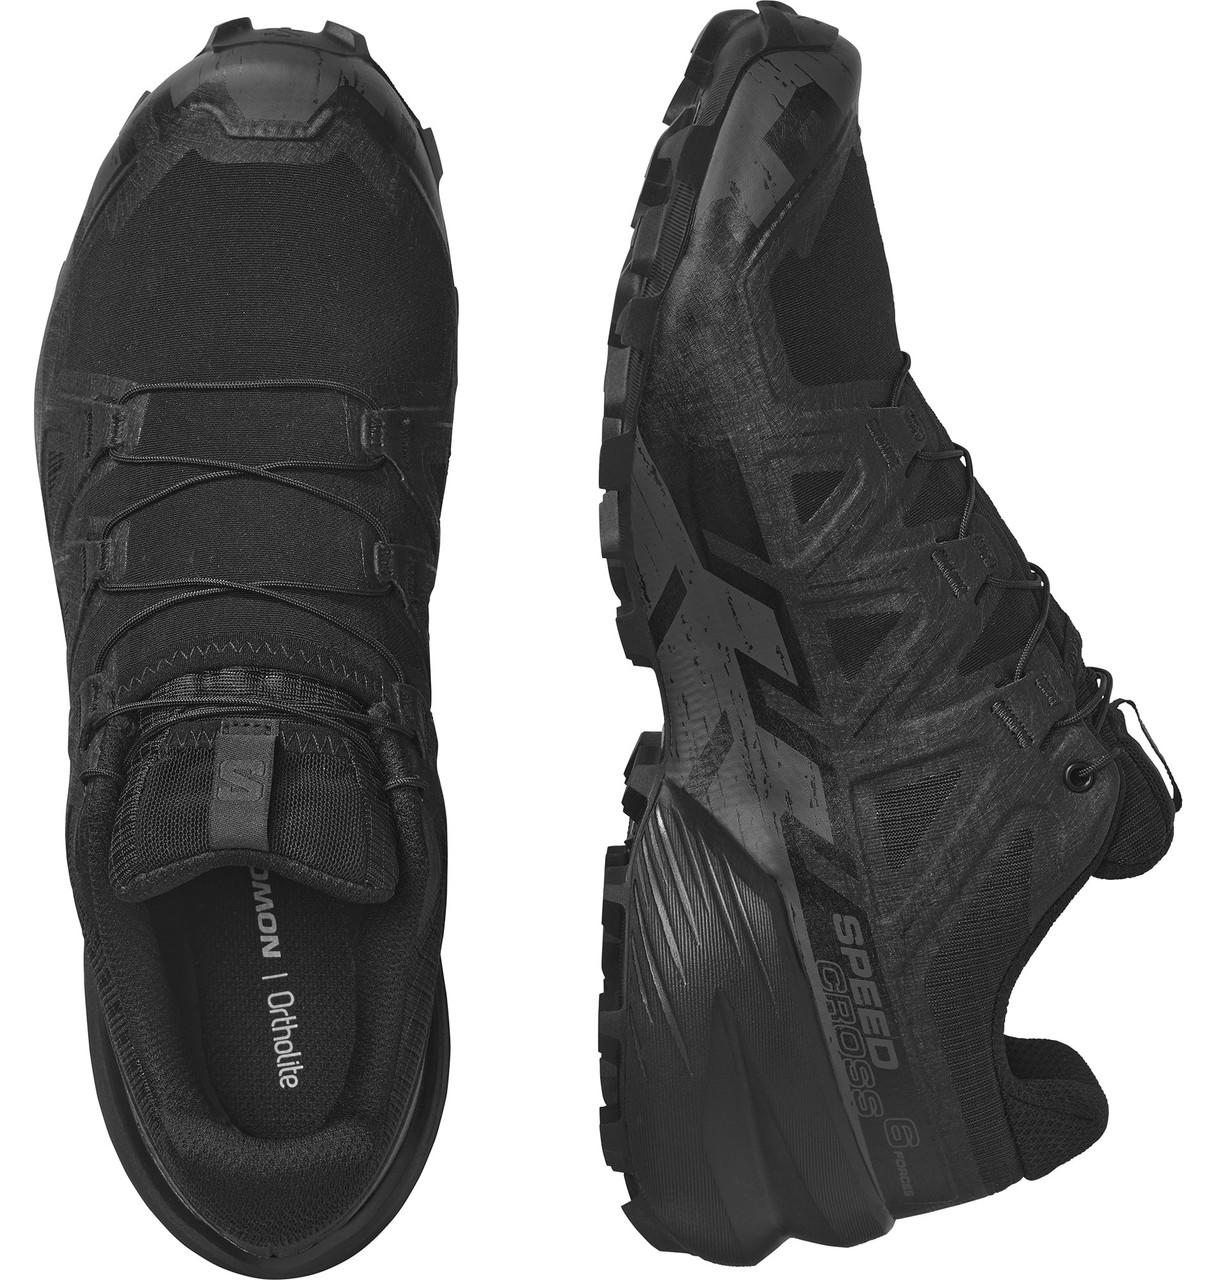 Salomon Speedcross 6 GTX Zapatillas de Trail Hombre - Black